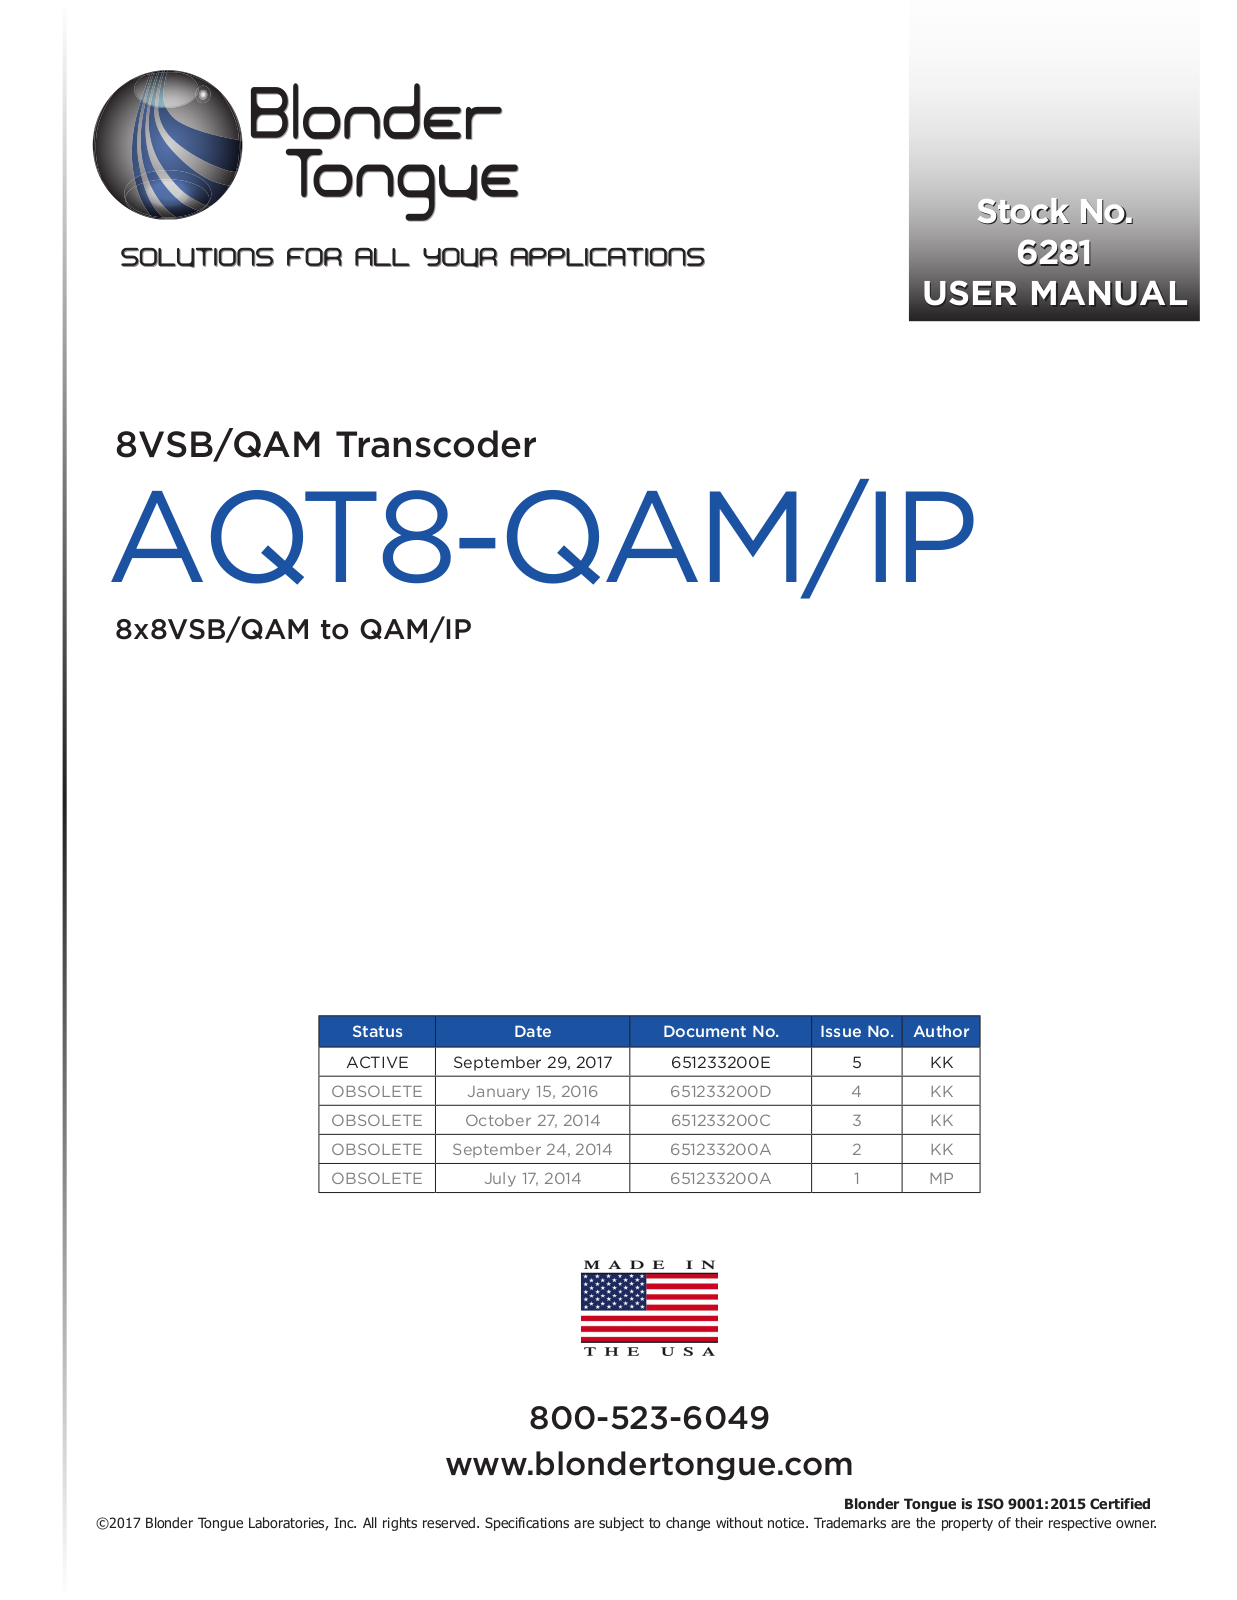 Blonder-Tongue AQT8-QAM/IP Users Manual